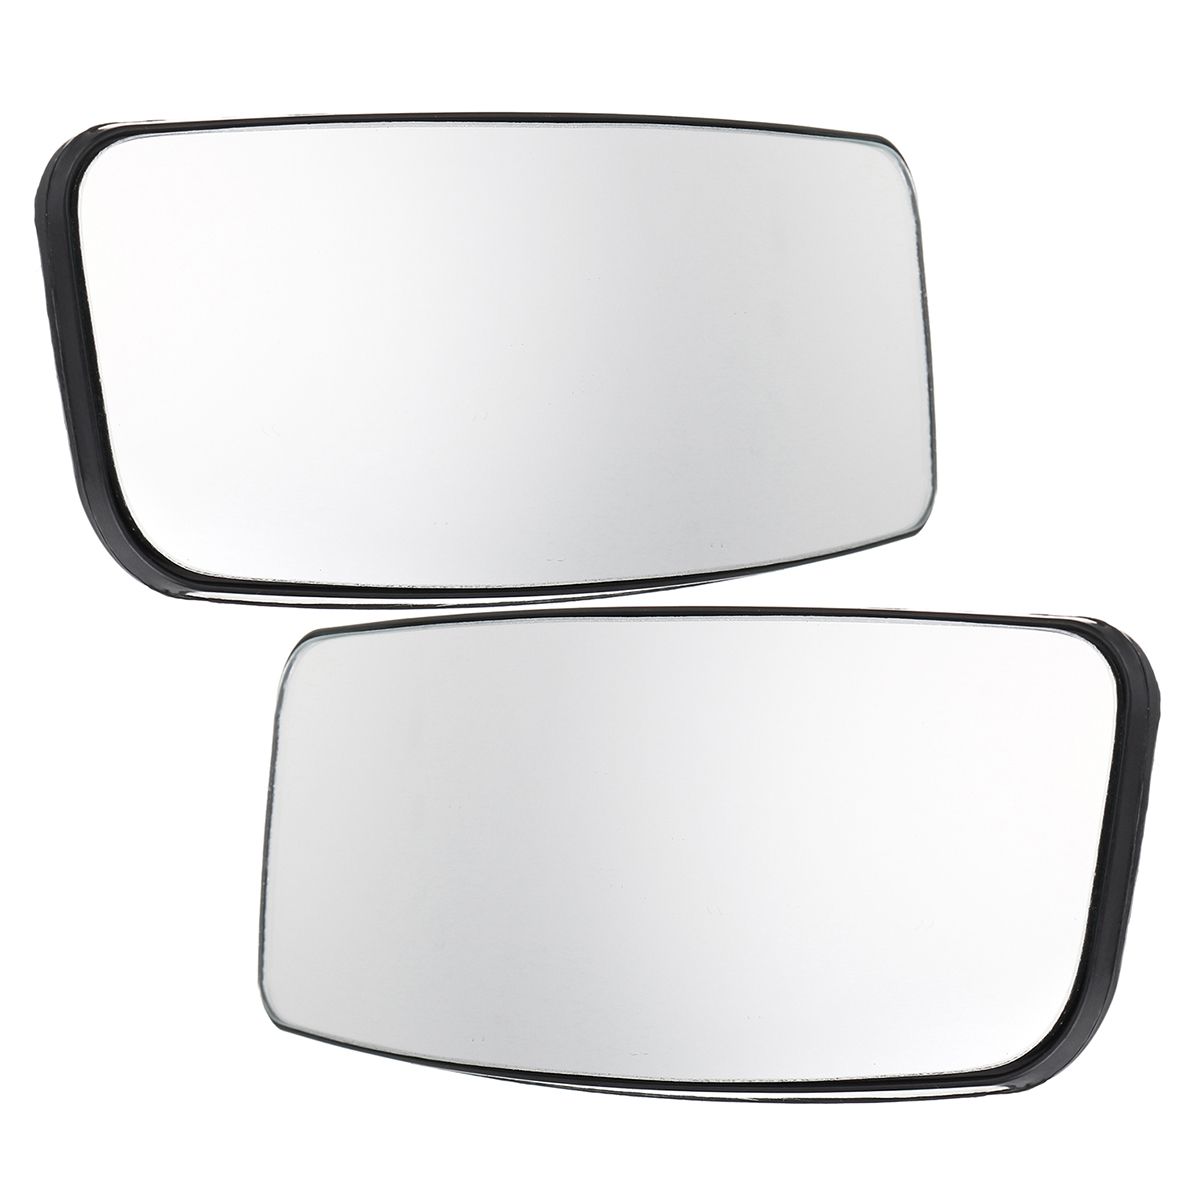 Car-Door-Wing-Mirror-Glass-Slide-PassangerDriver-Side-For-Benz-2006-on-1227761